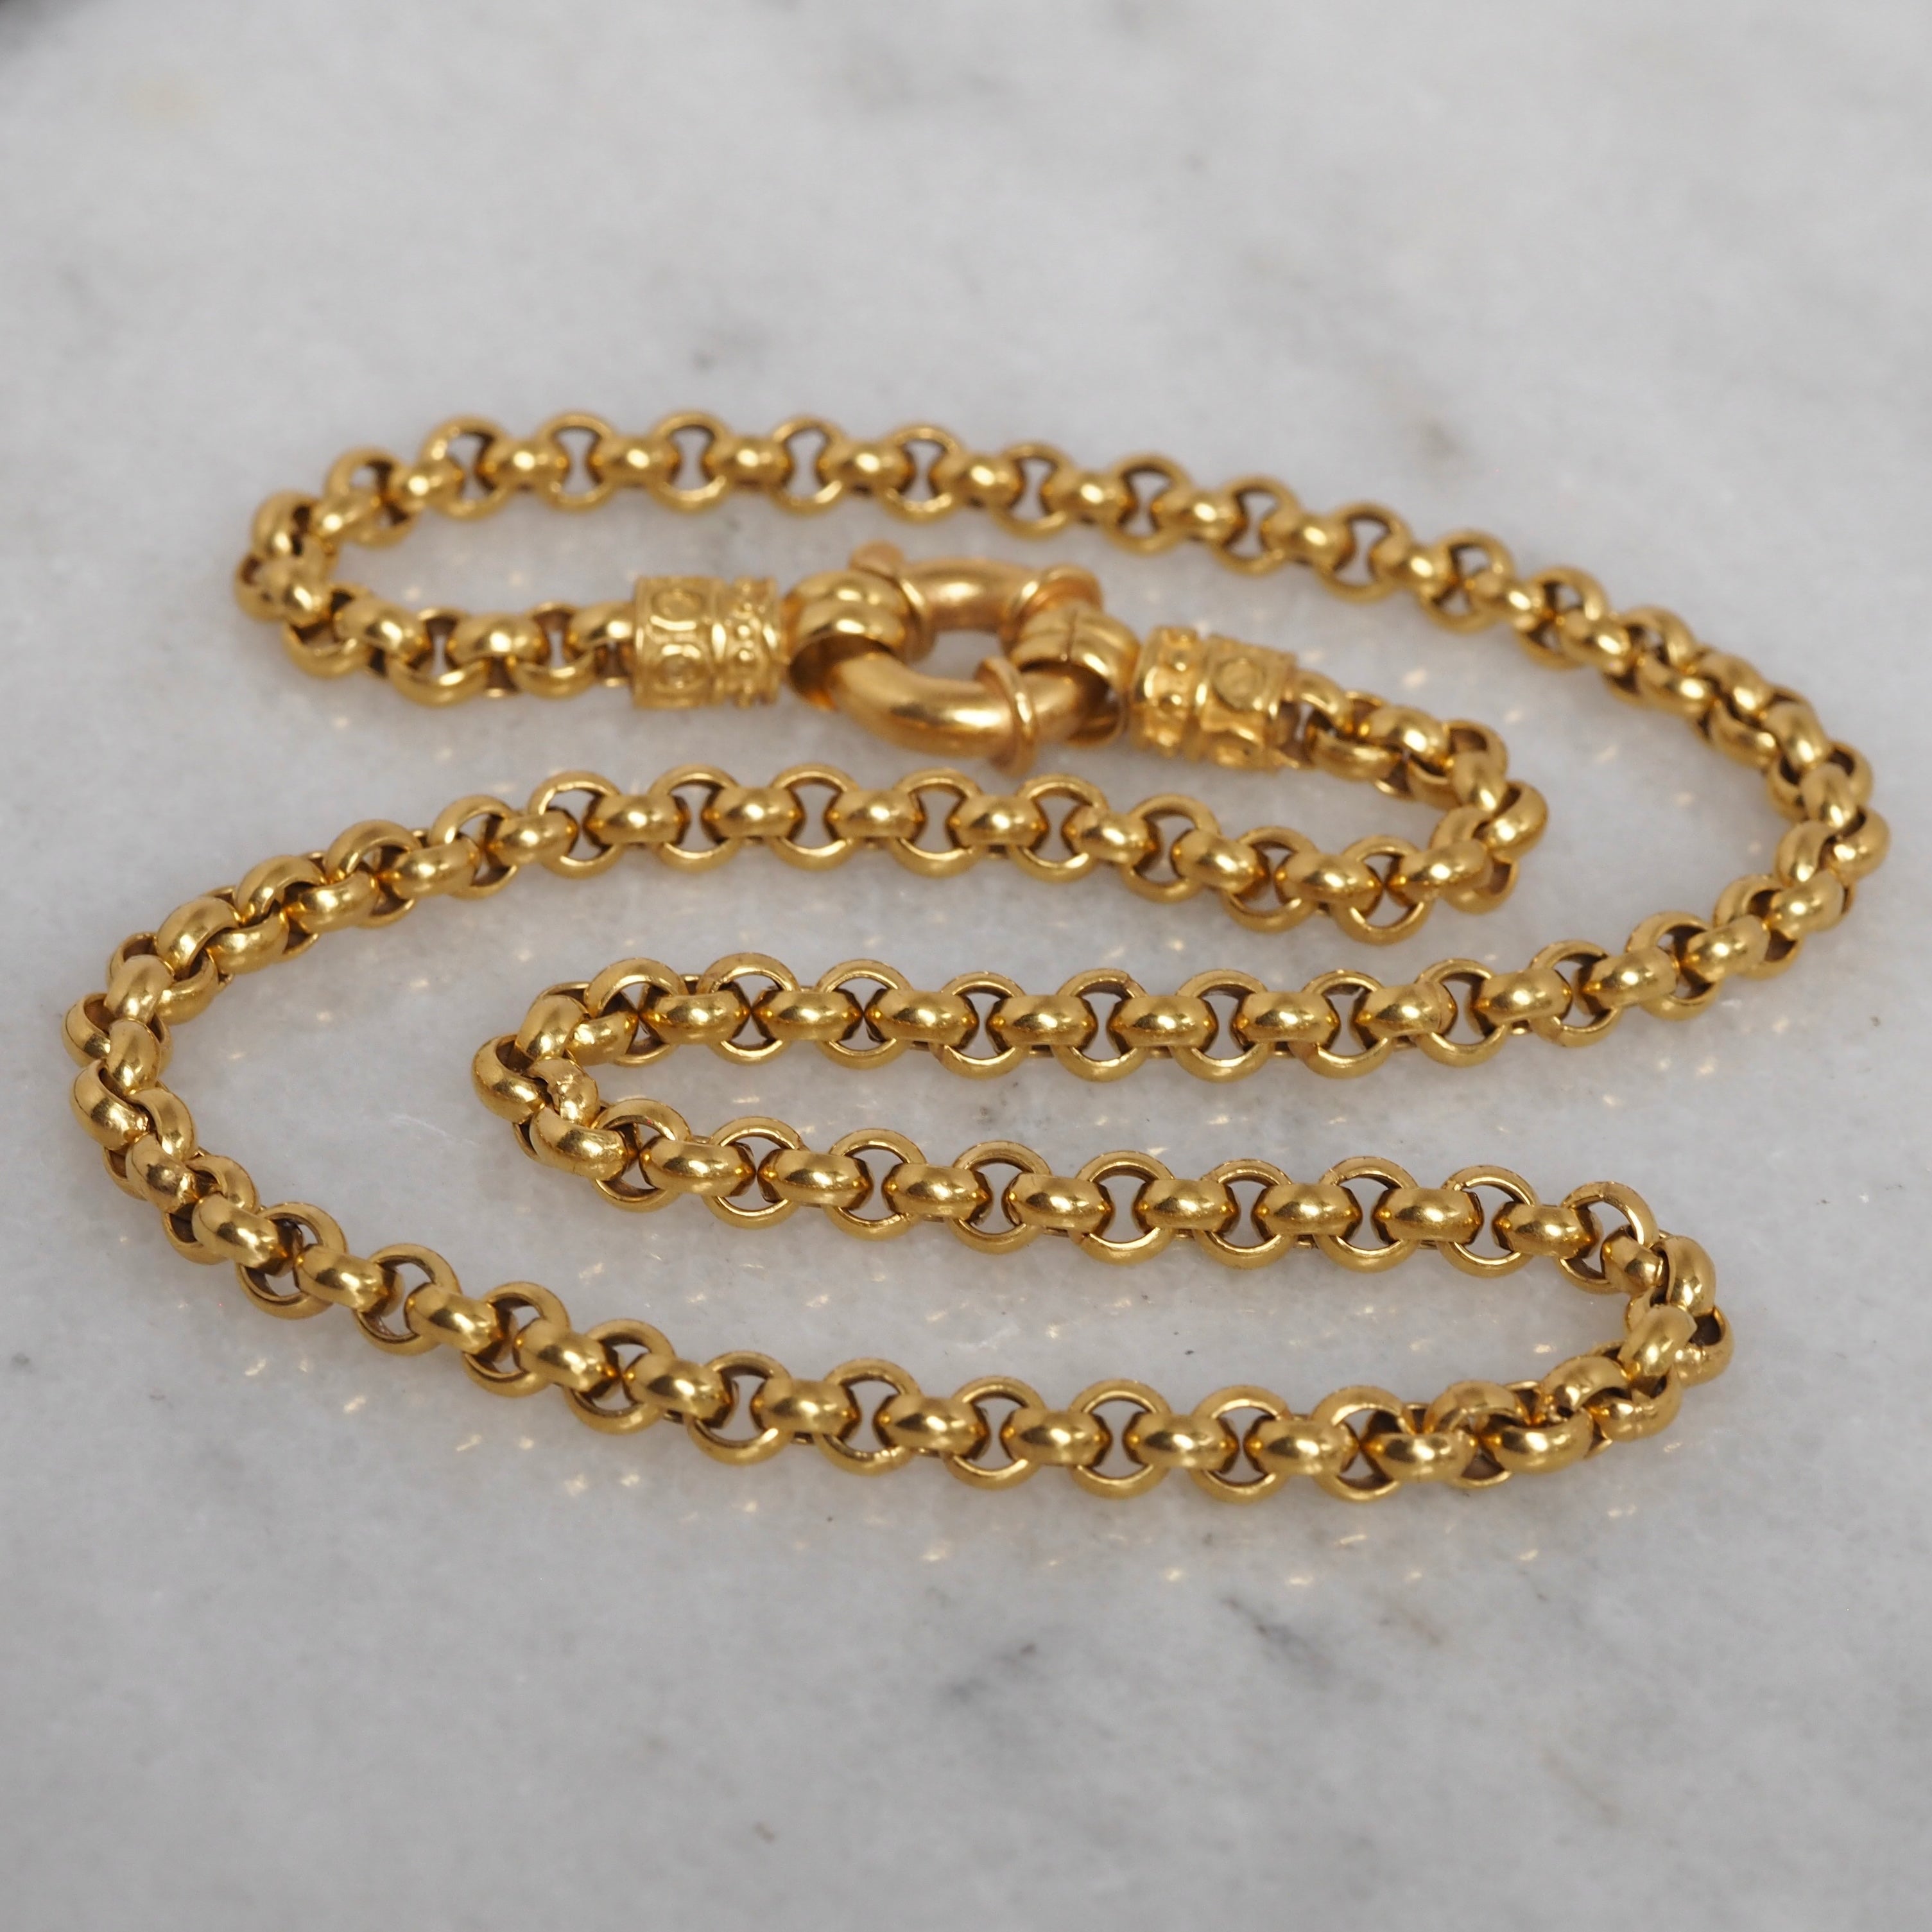 Vintage Portuguese 19k Gold Rolo Link Chain Necklace